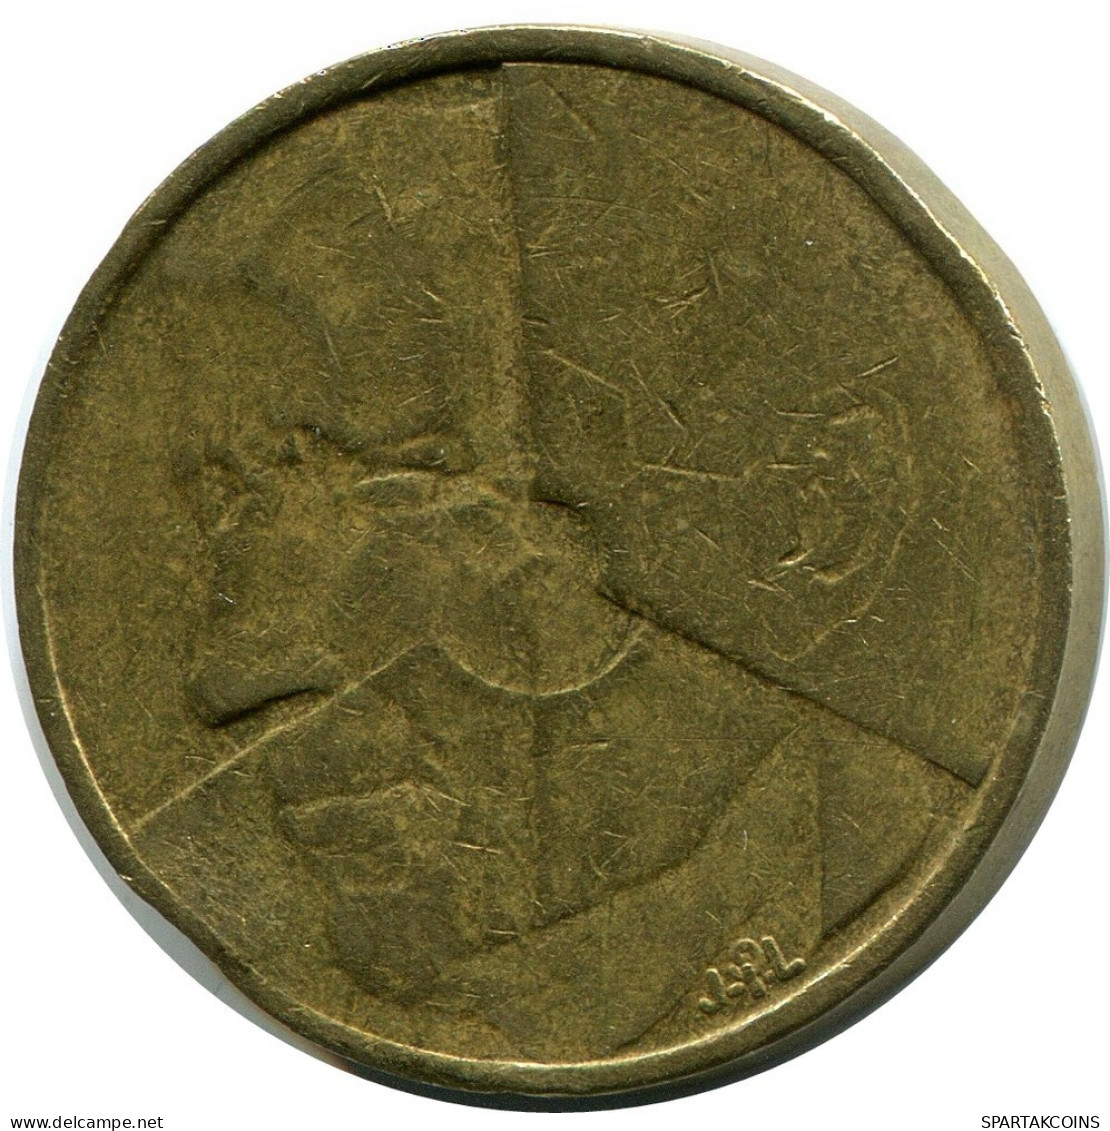 5 FRANCS 1986 DUTCH Text BELGIUM Coin #AZ366.U.A - 5 Frank